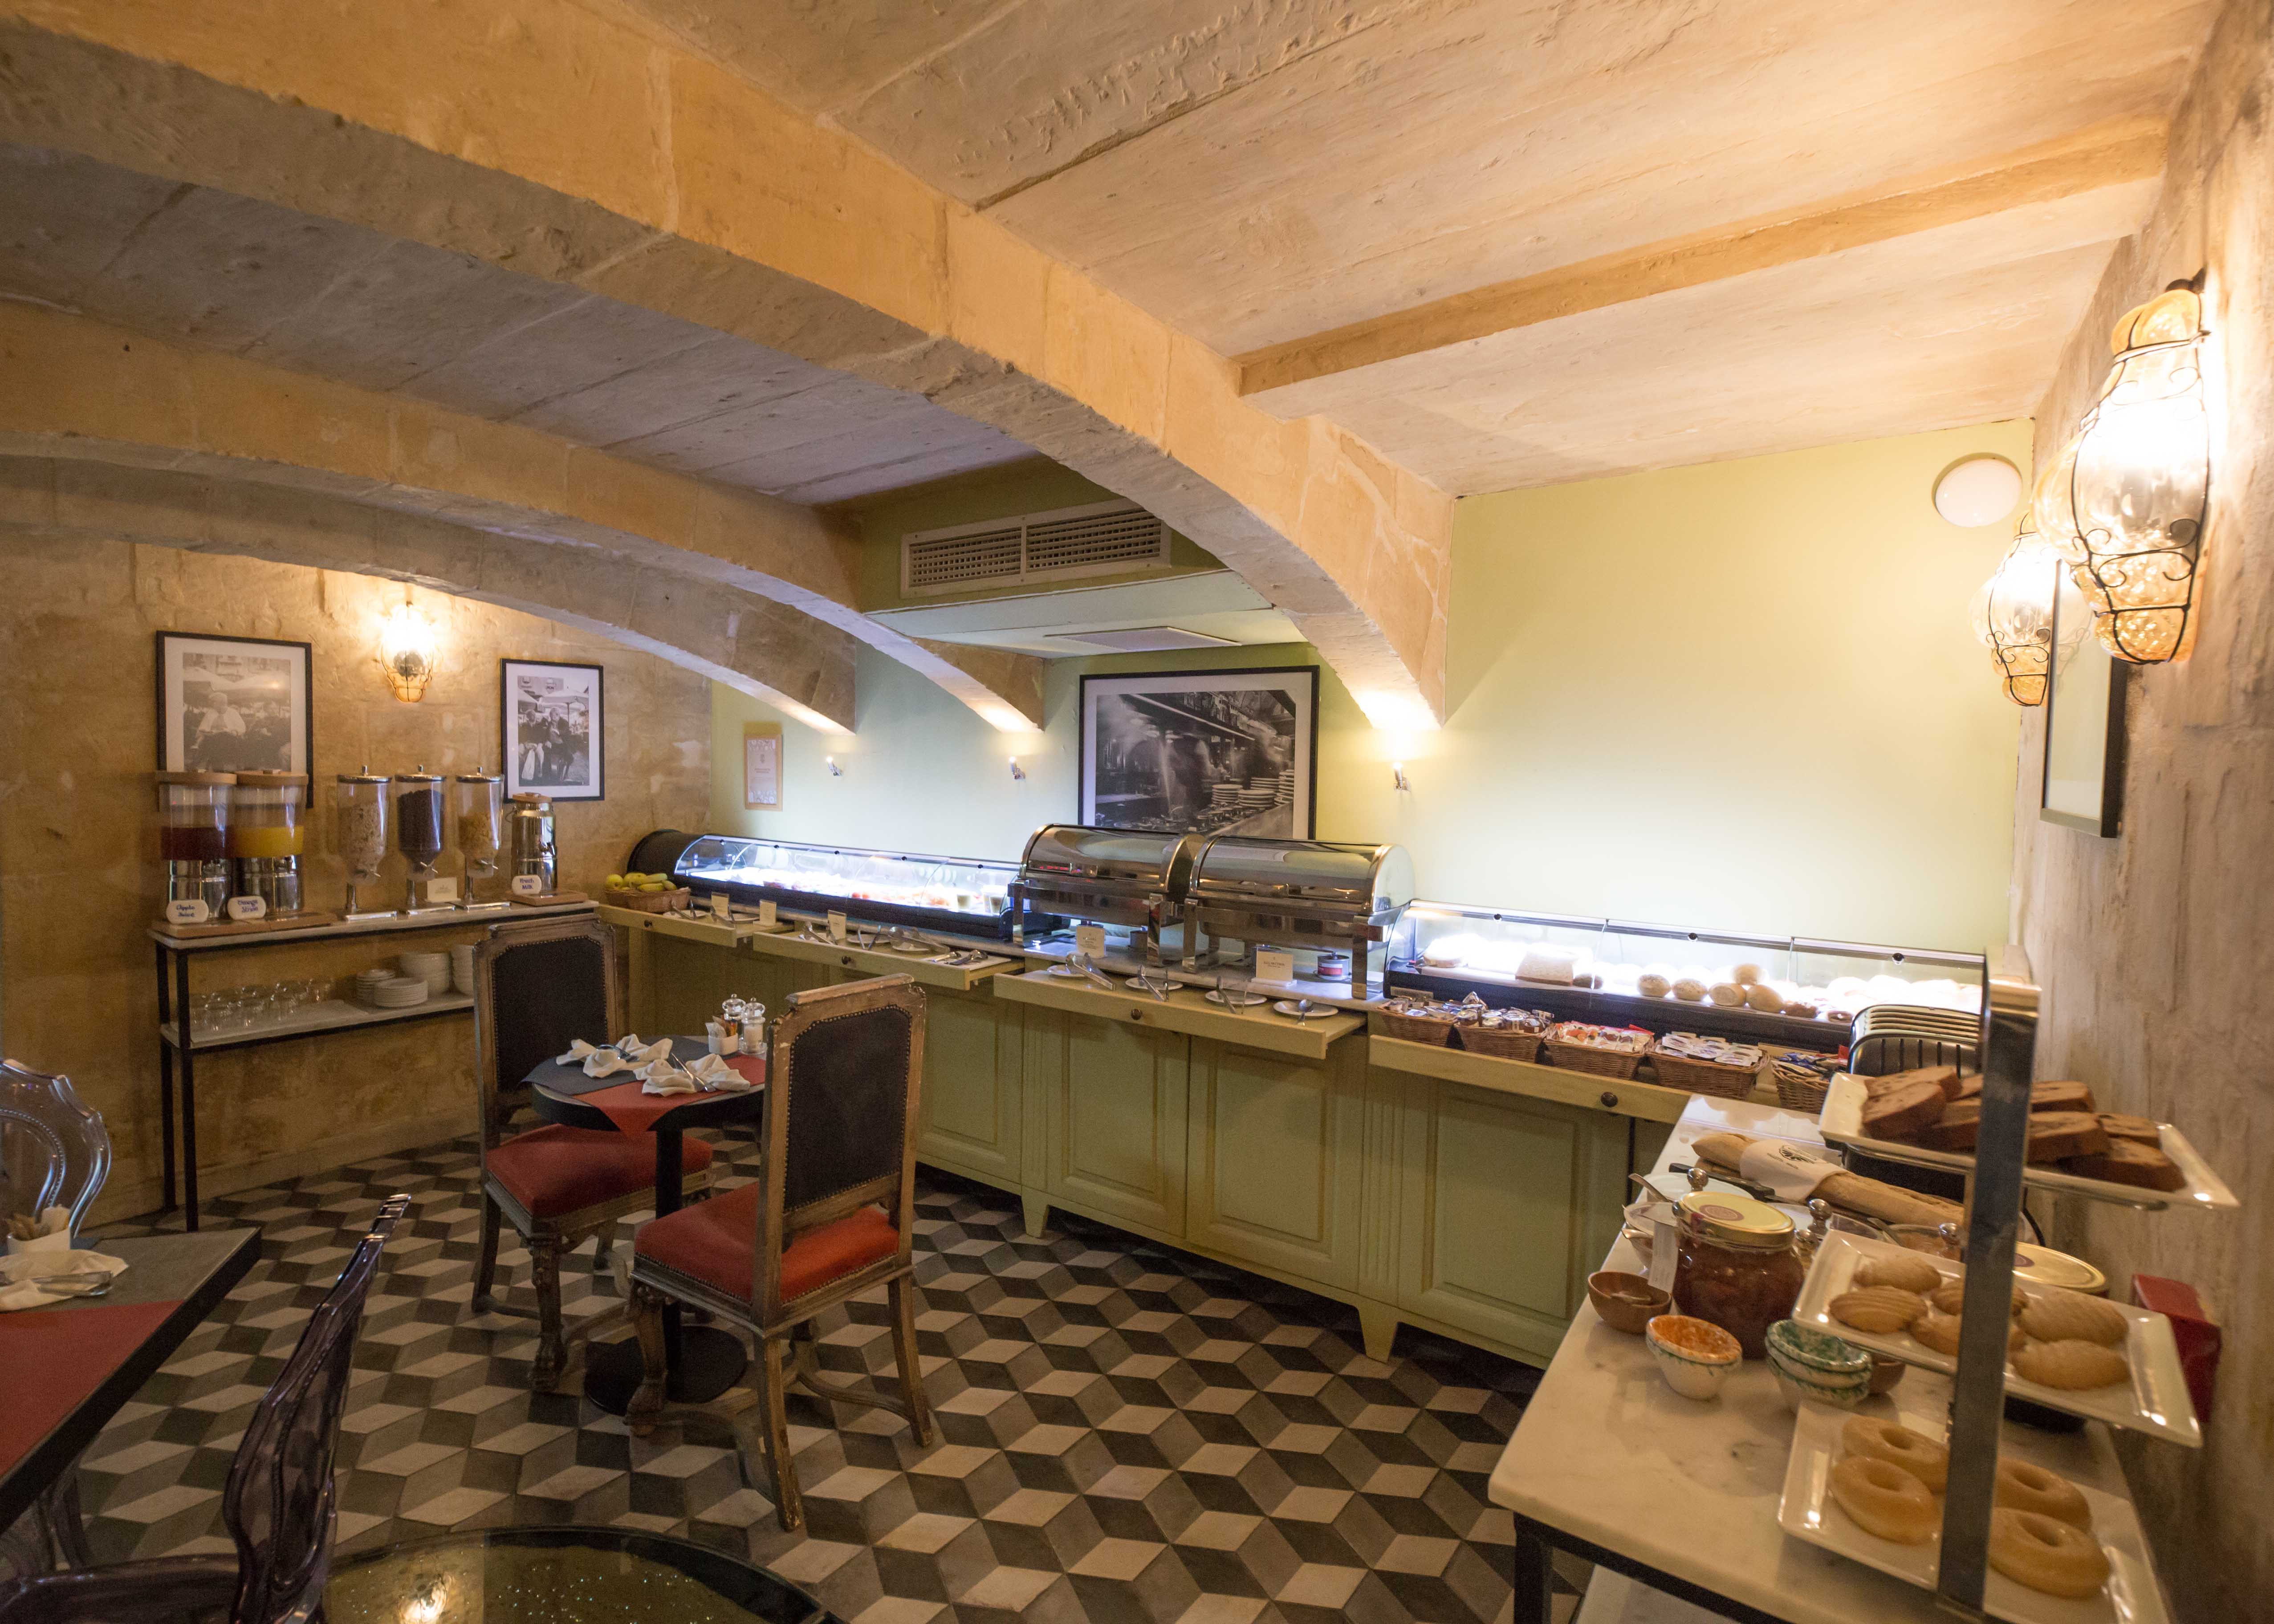 馬爾他 瓦萊塔 精品飯店早餐 Palazzo Consiglia